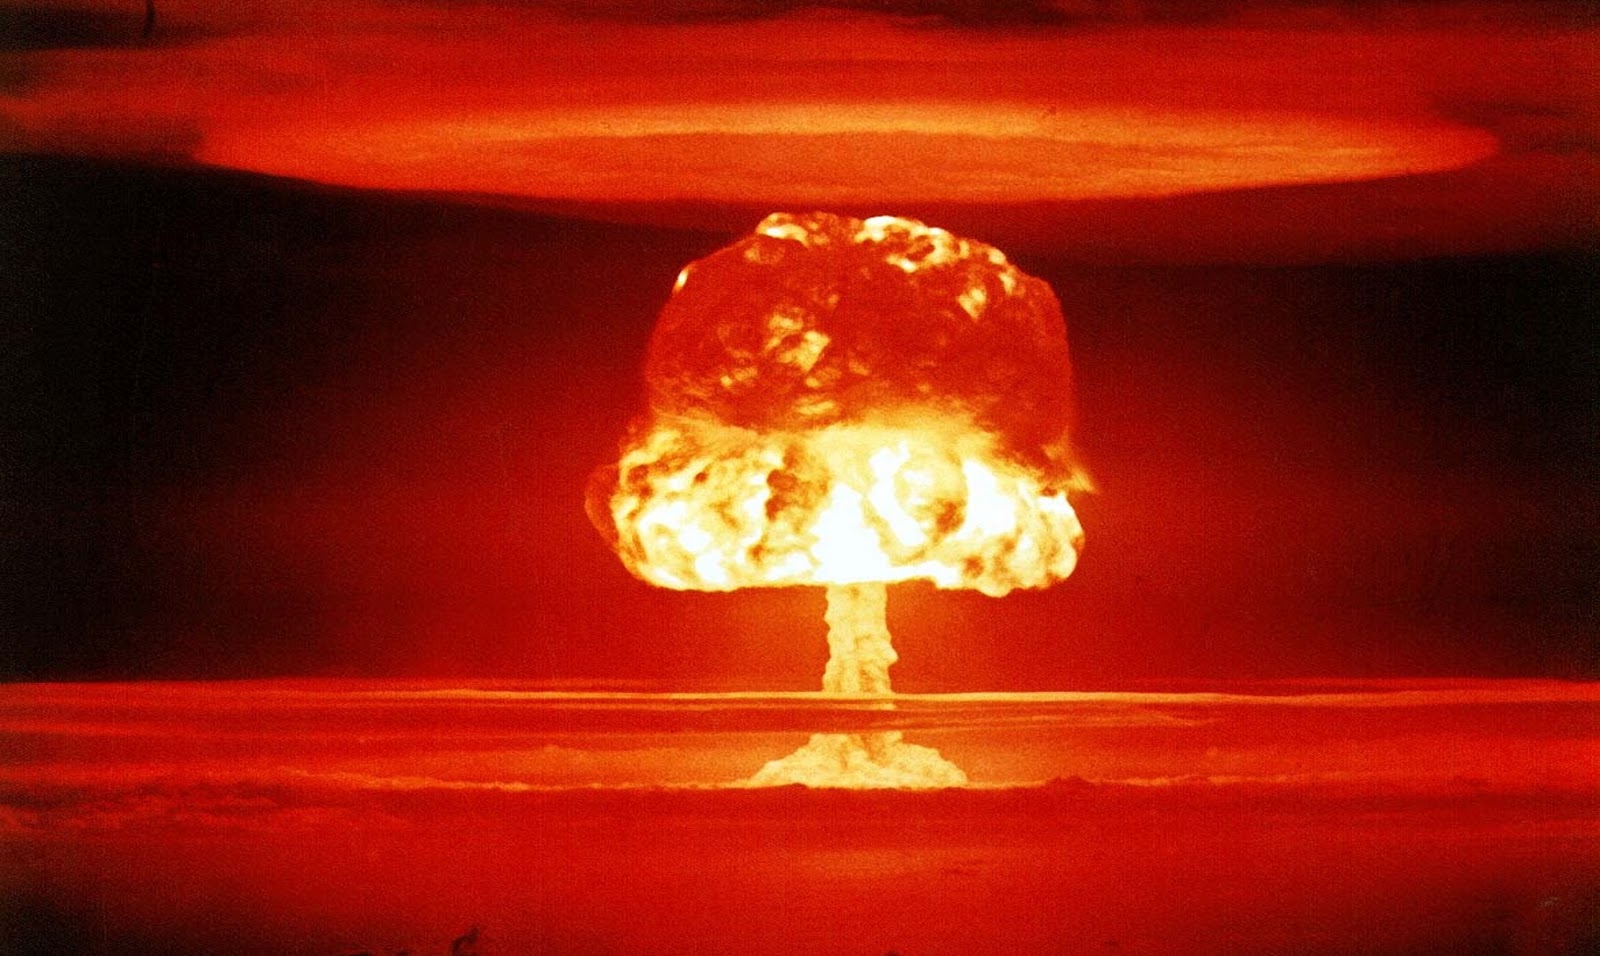 Bomba Nuclear